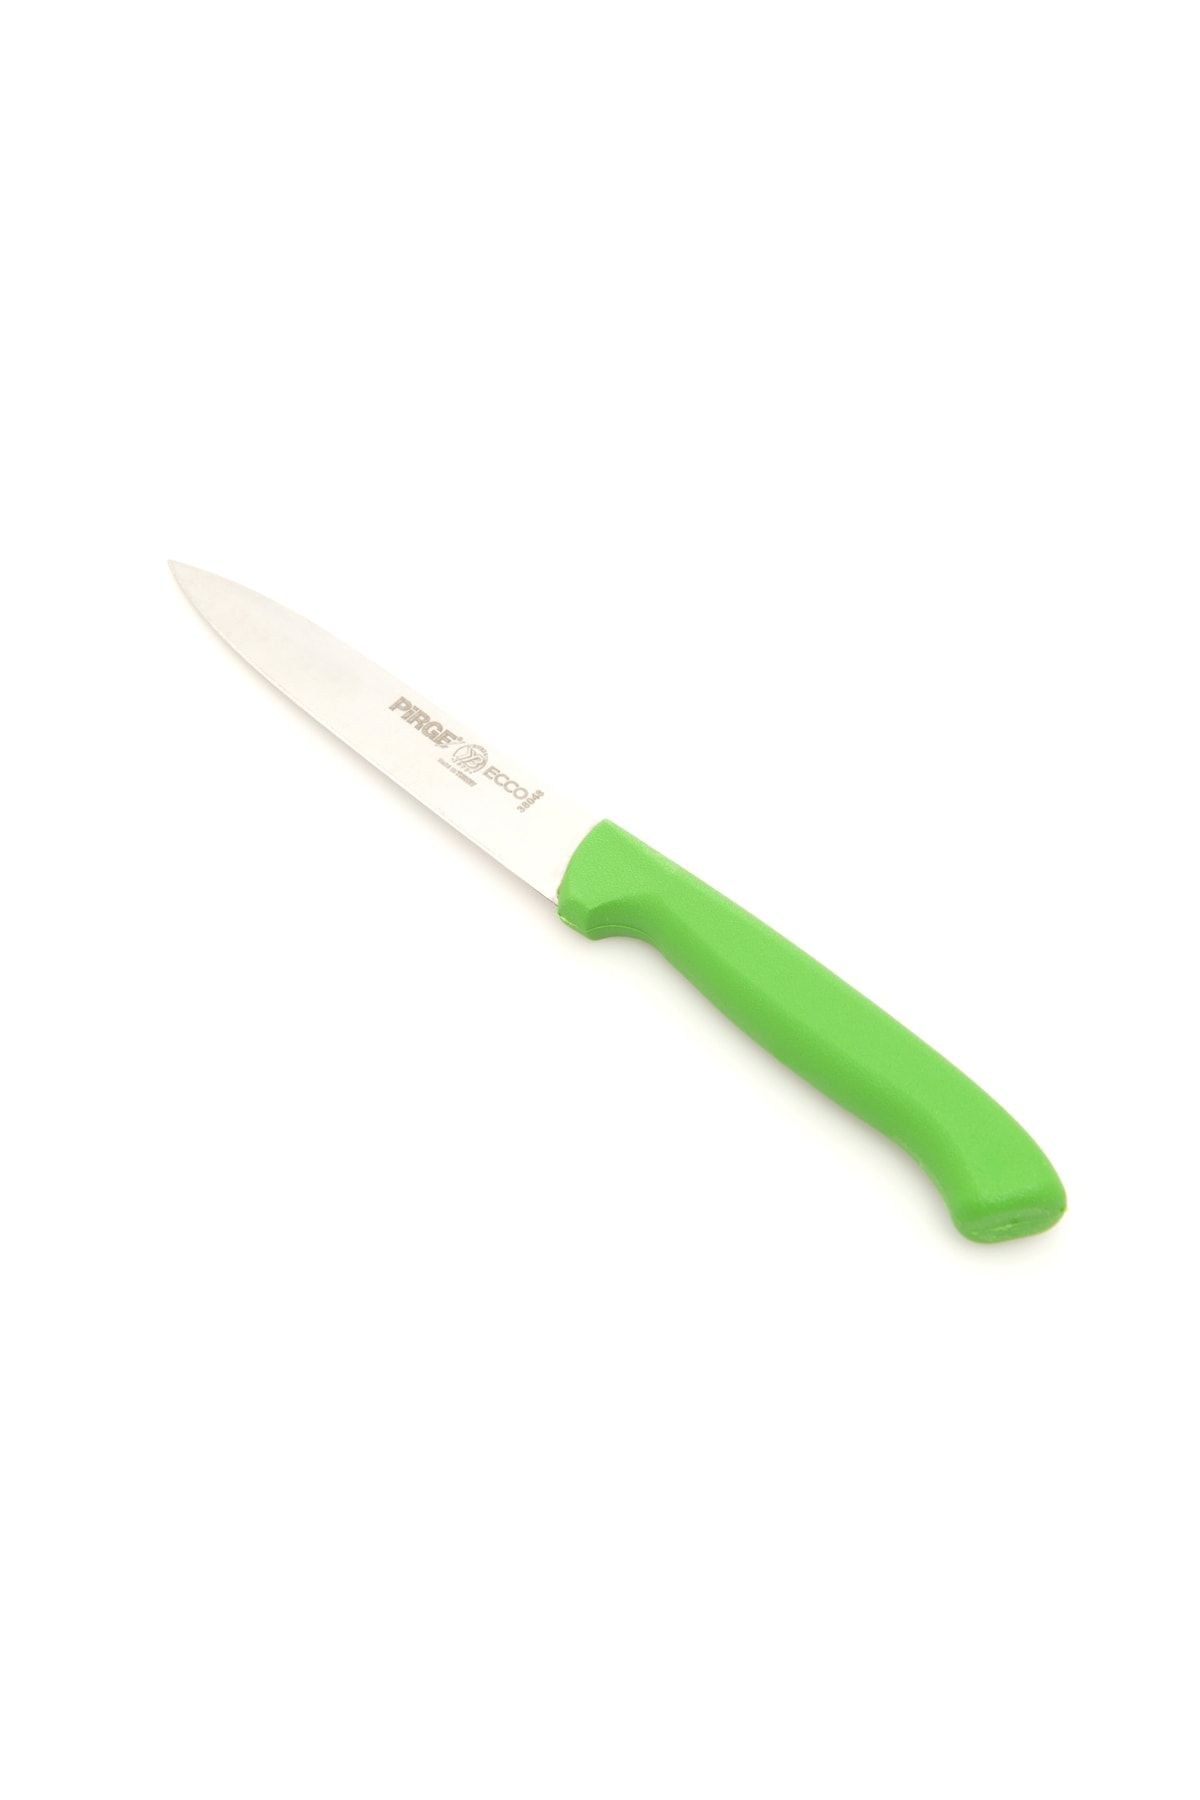 Pirge Ecco Sivri Sebze Soyma Bıçağı - Yeşil/12 Cm